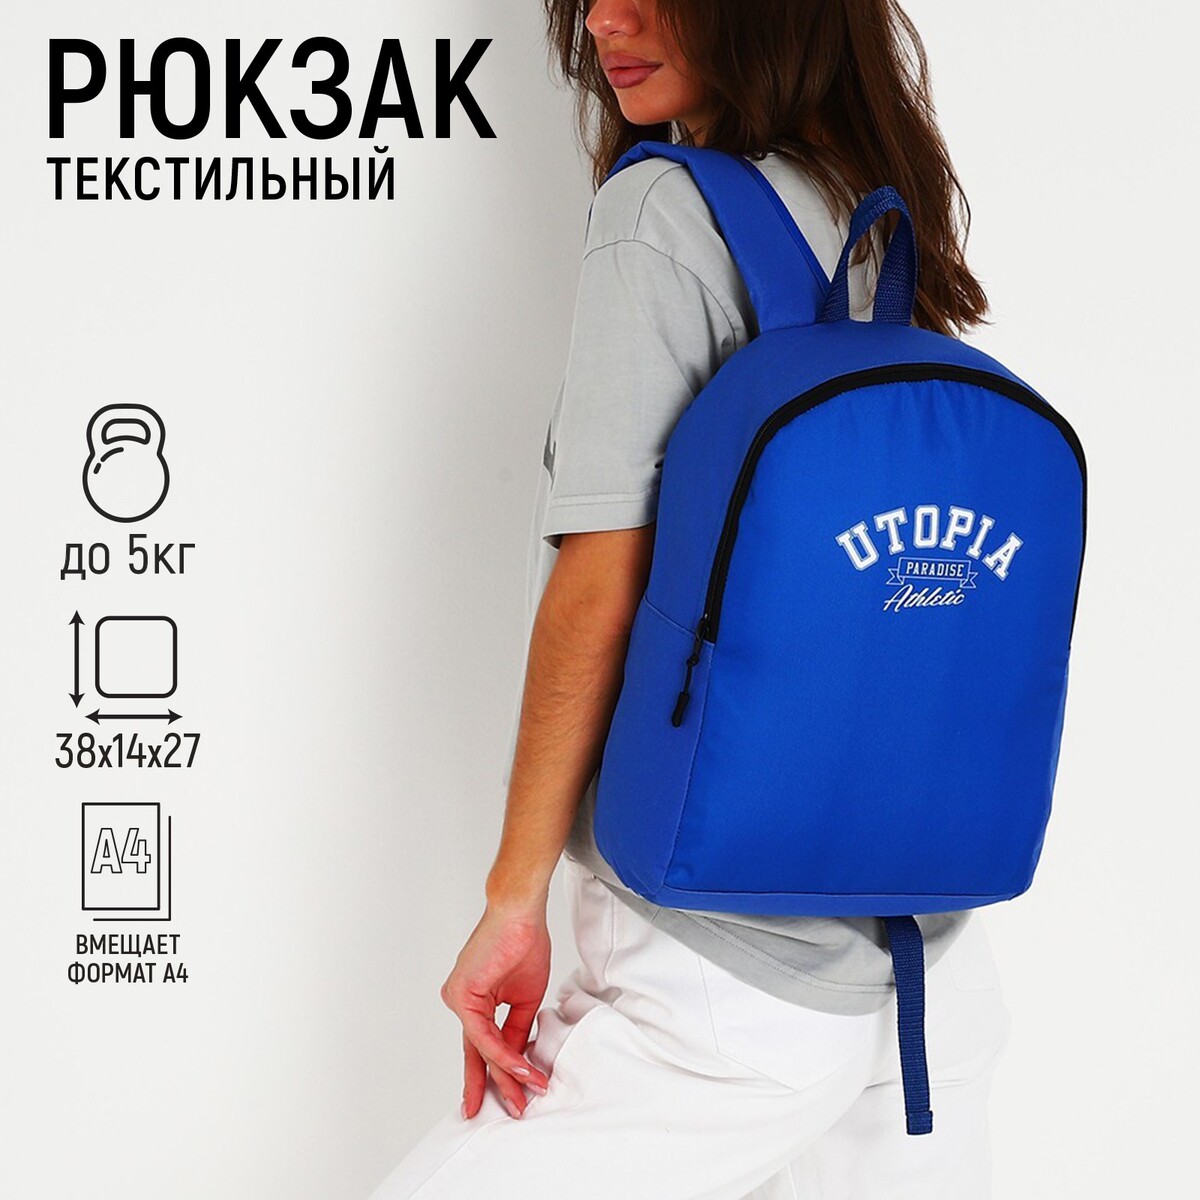 Рюкзак текстильный utopia, 38х14х27 см, цвет синий рюкзак текстильный утка 38х14х27 см